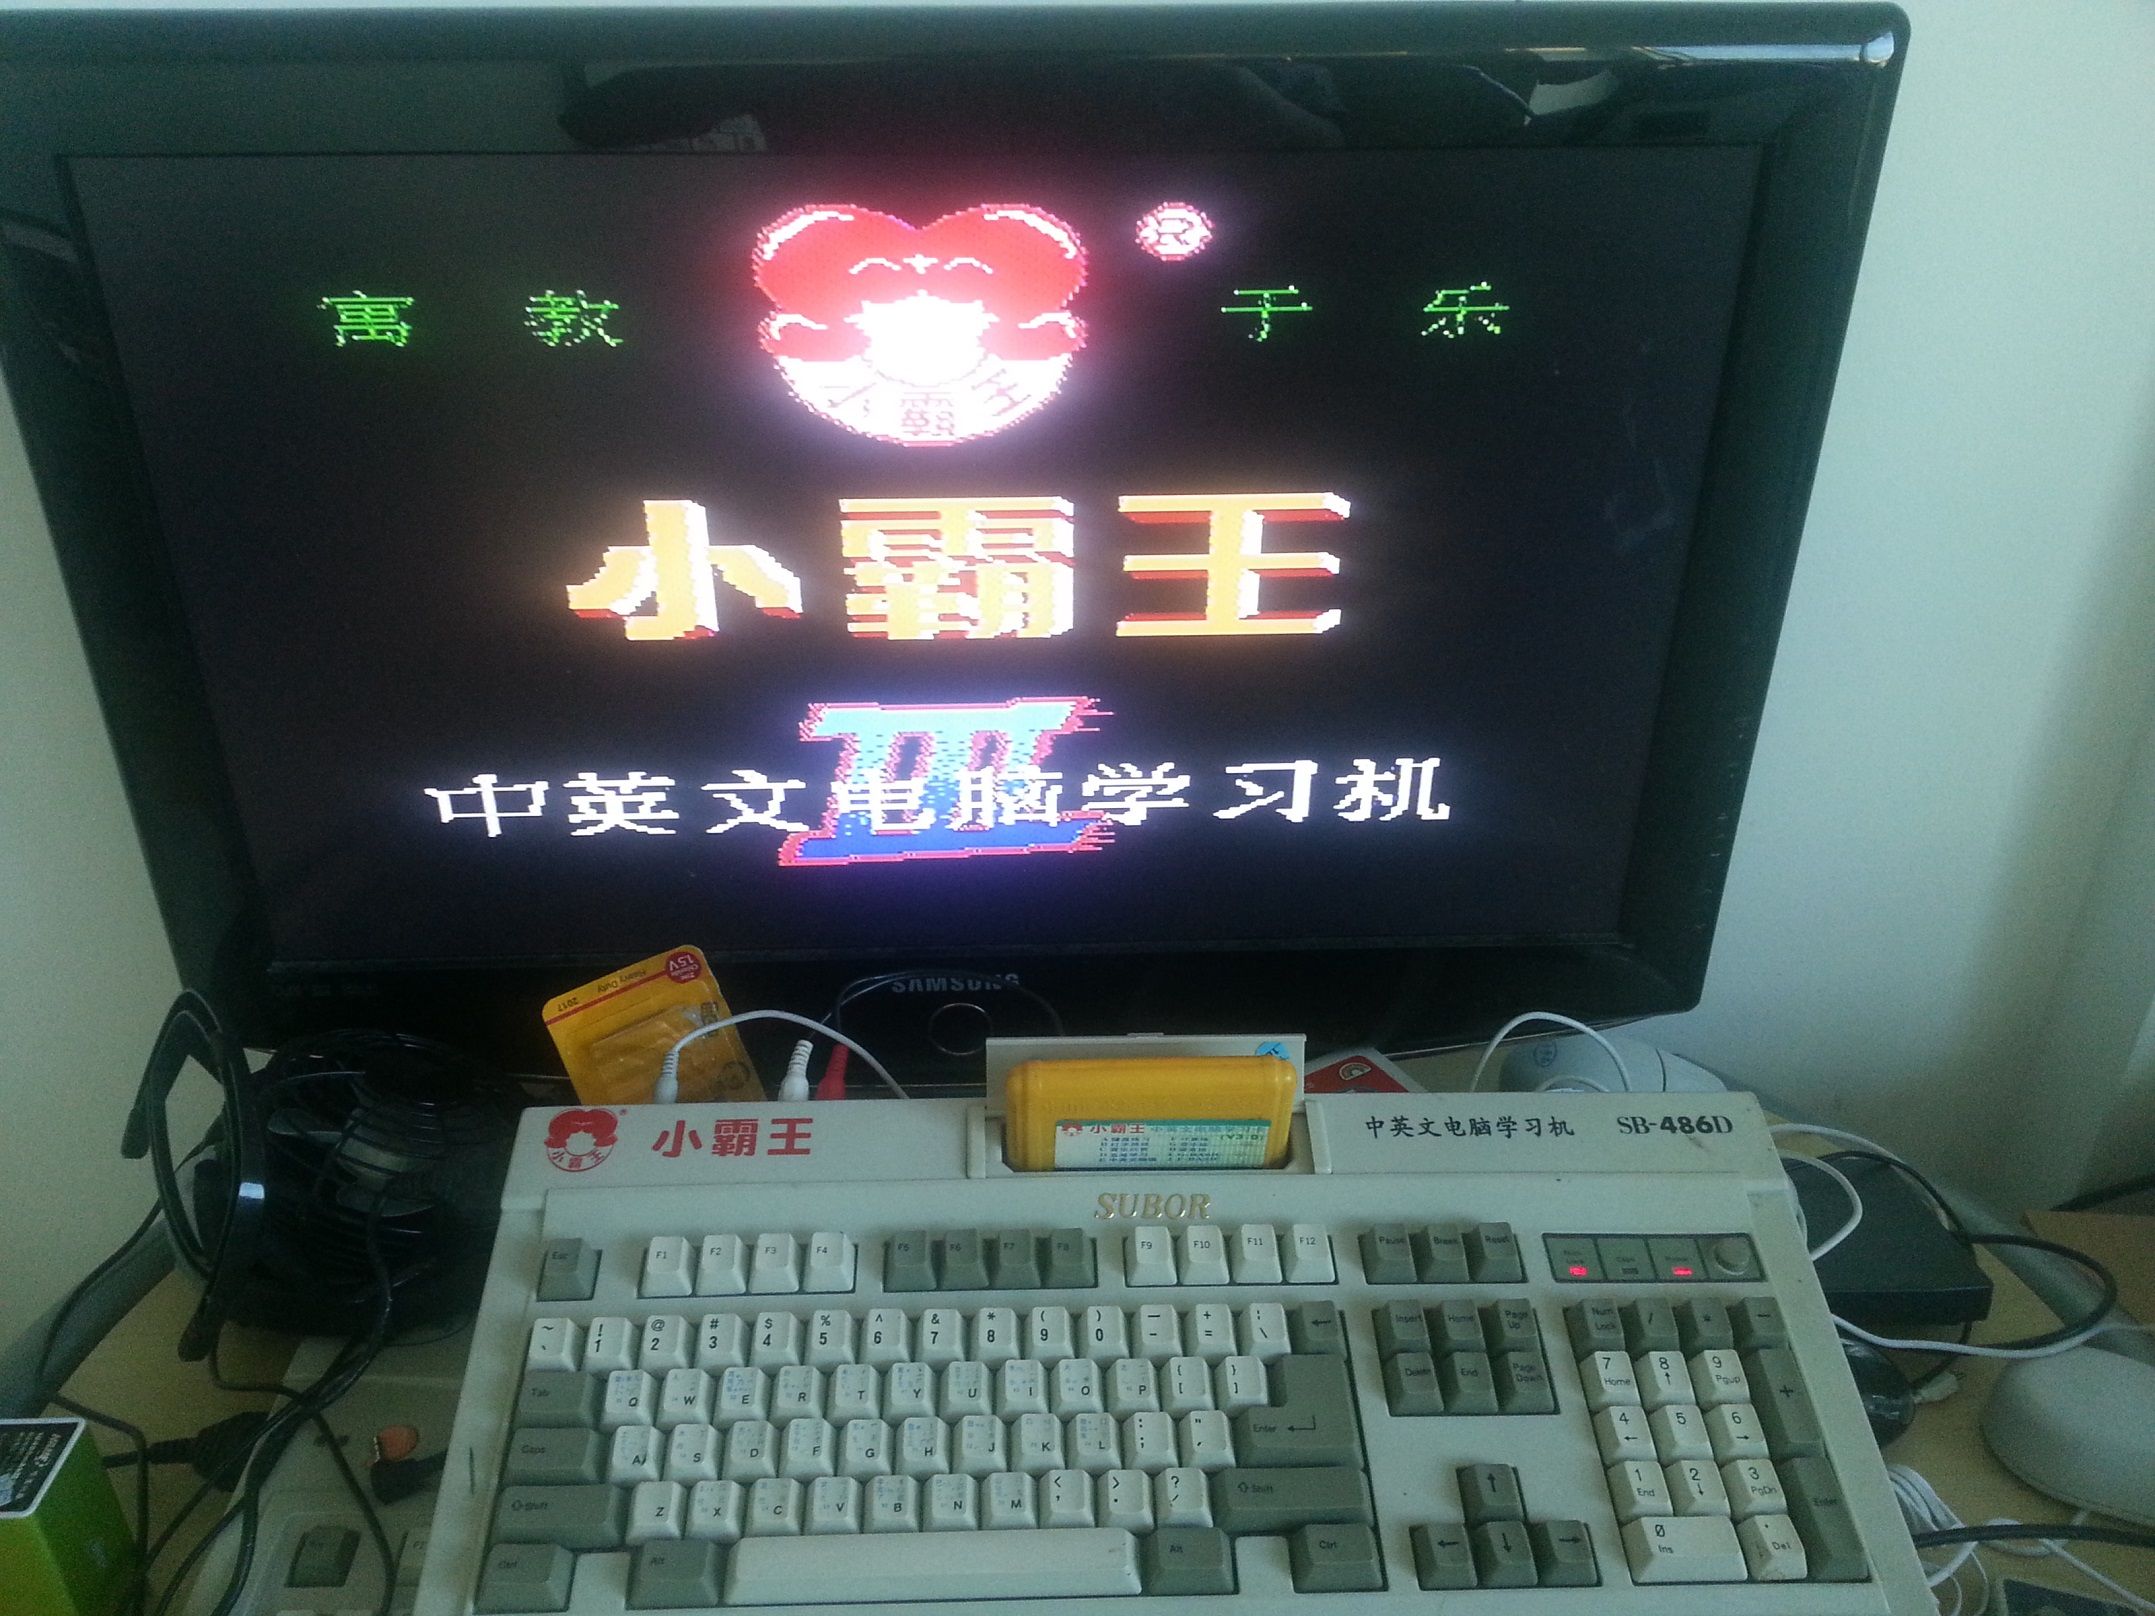 071b017712f6d5981475a8b107a9f834 The Childhood Memory - Subor Famicom Clone SB-486D (Xiao Ba Wang) 8 bit Nintendo Entertainment System Subor 